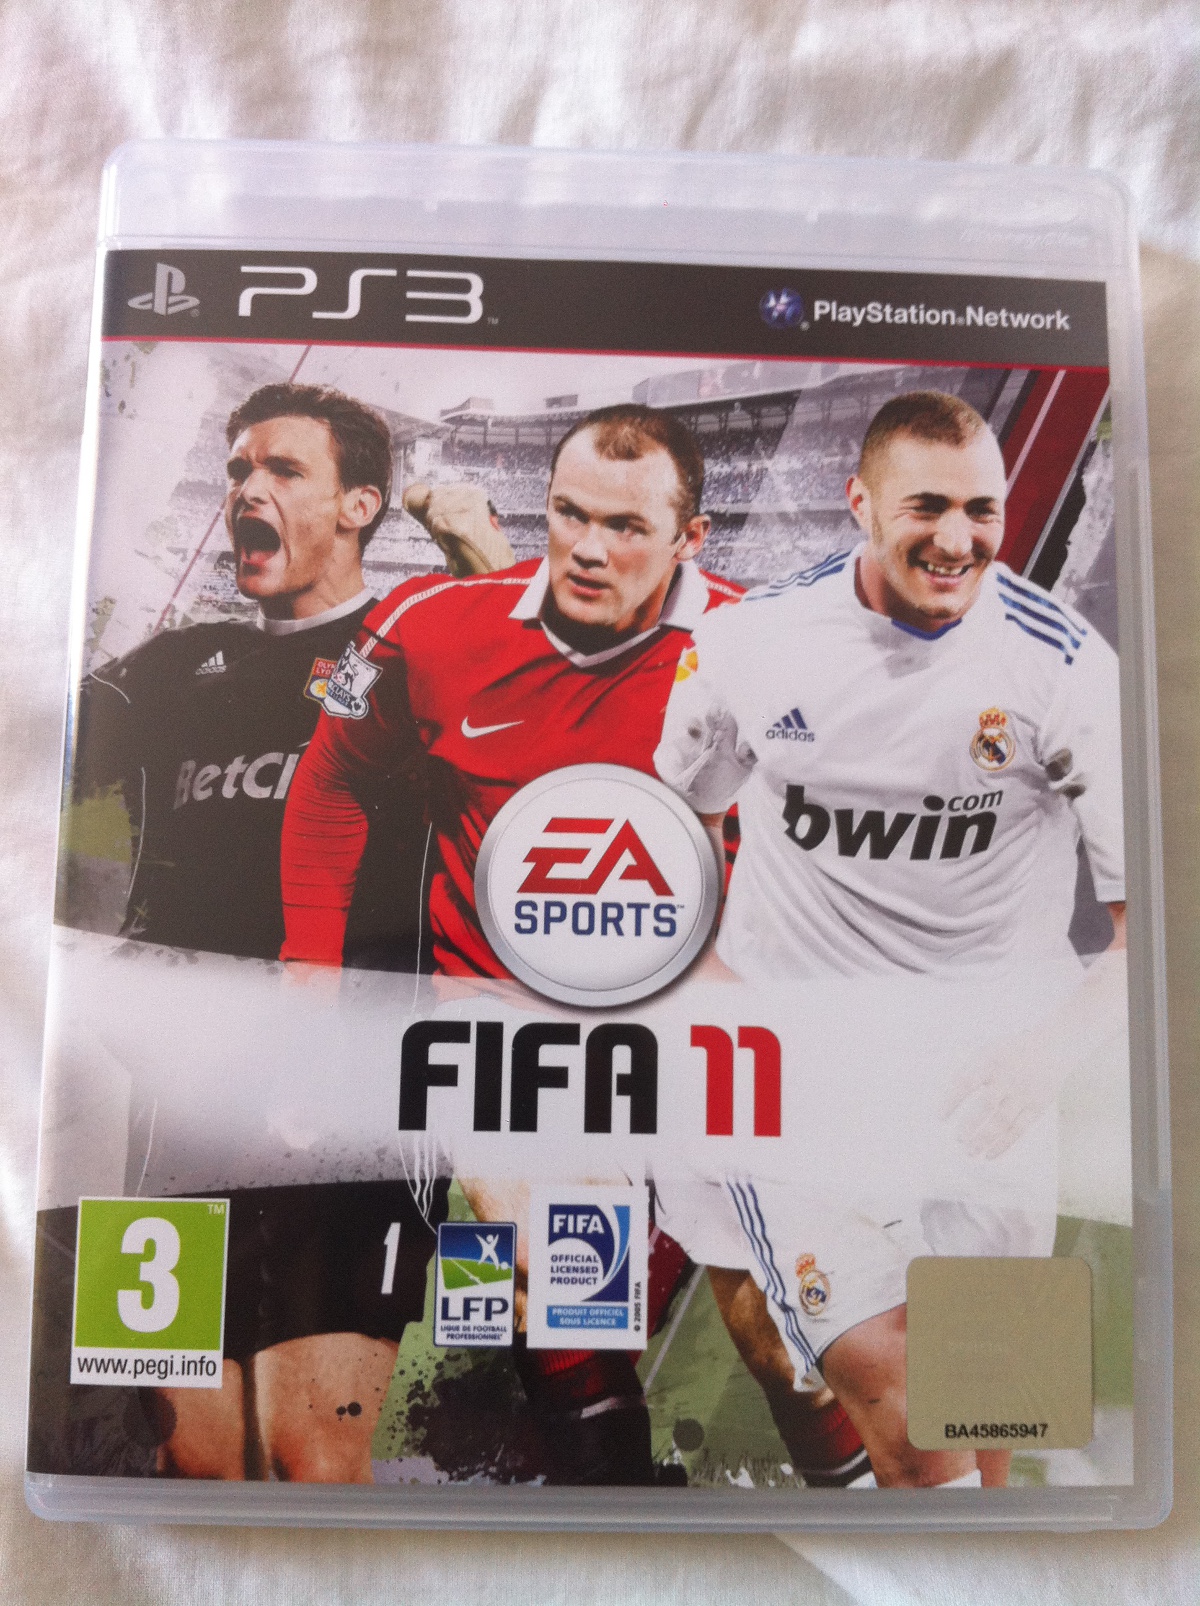 Nouveau jeu FIFA 11